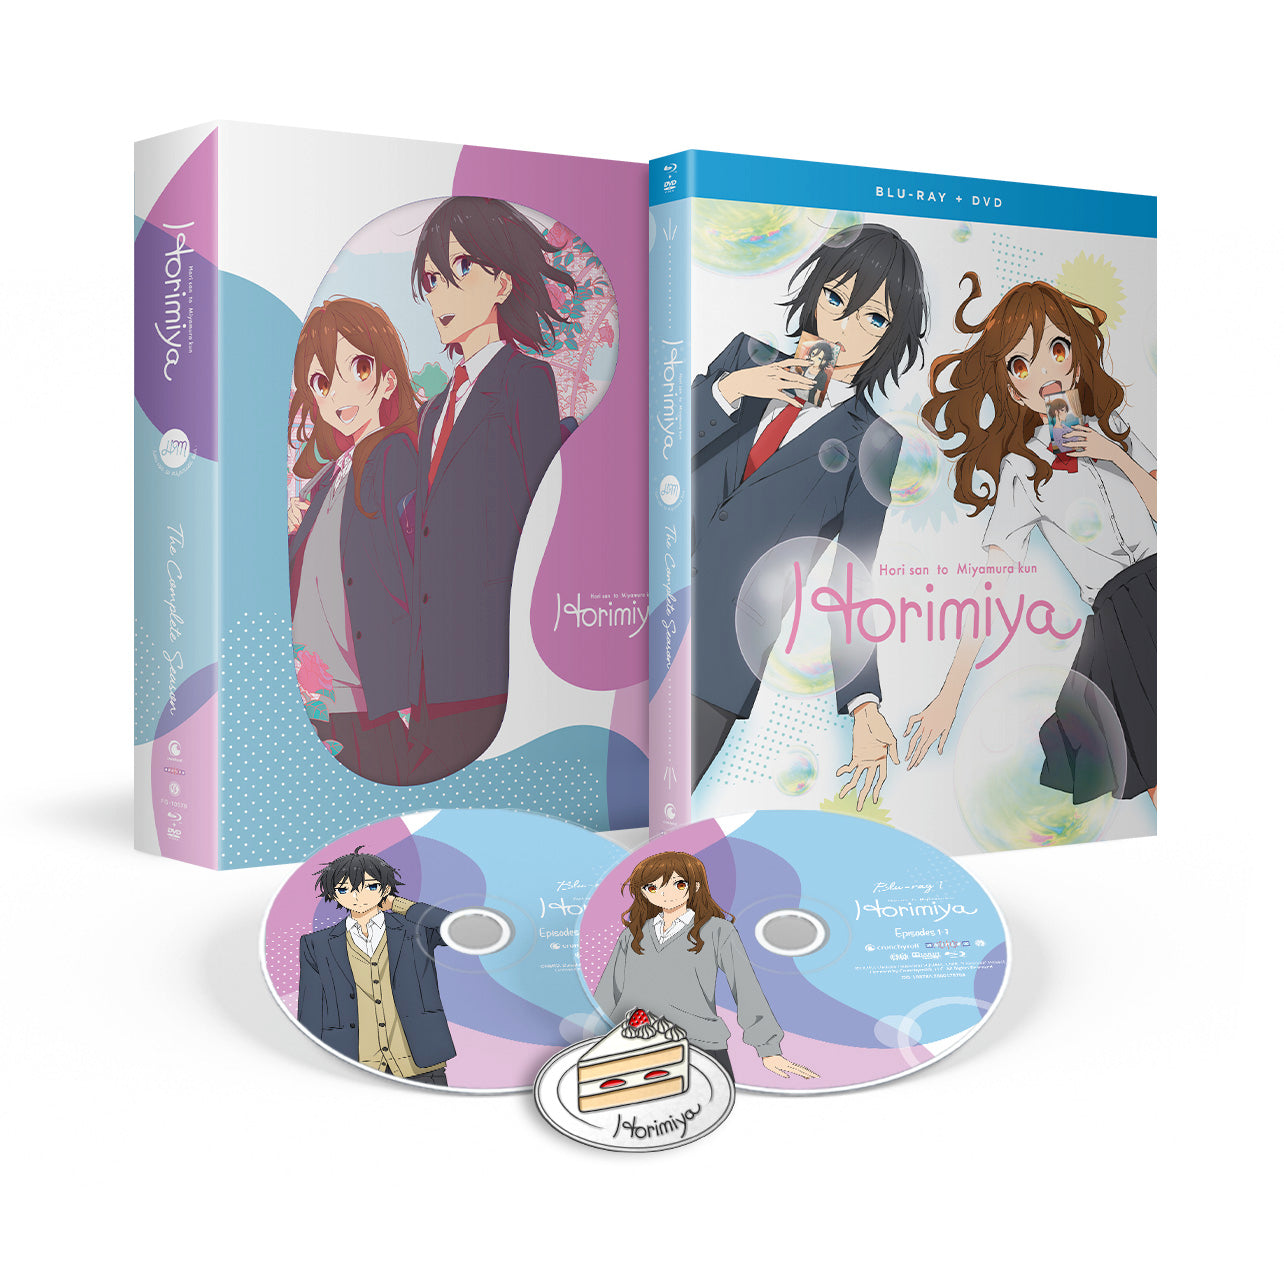 Horimiya - The Complete Season - BD/DVD - LE image count 1